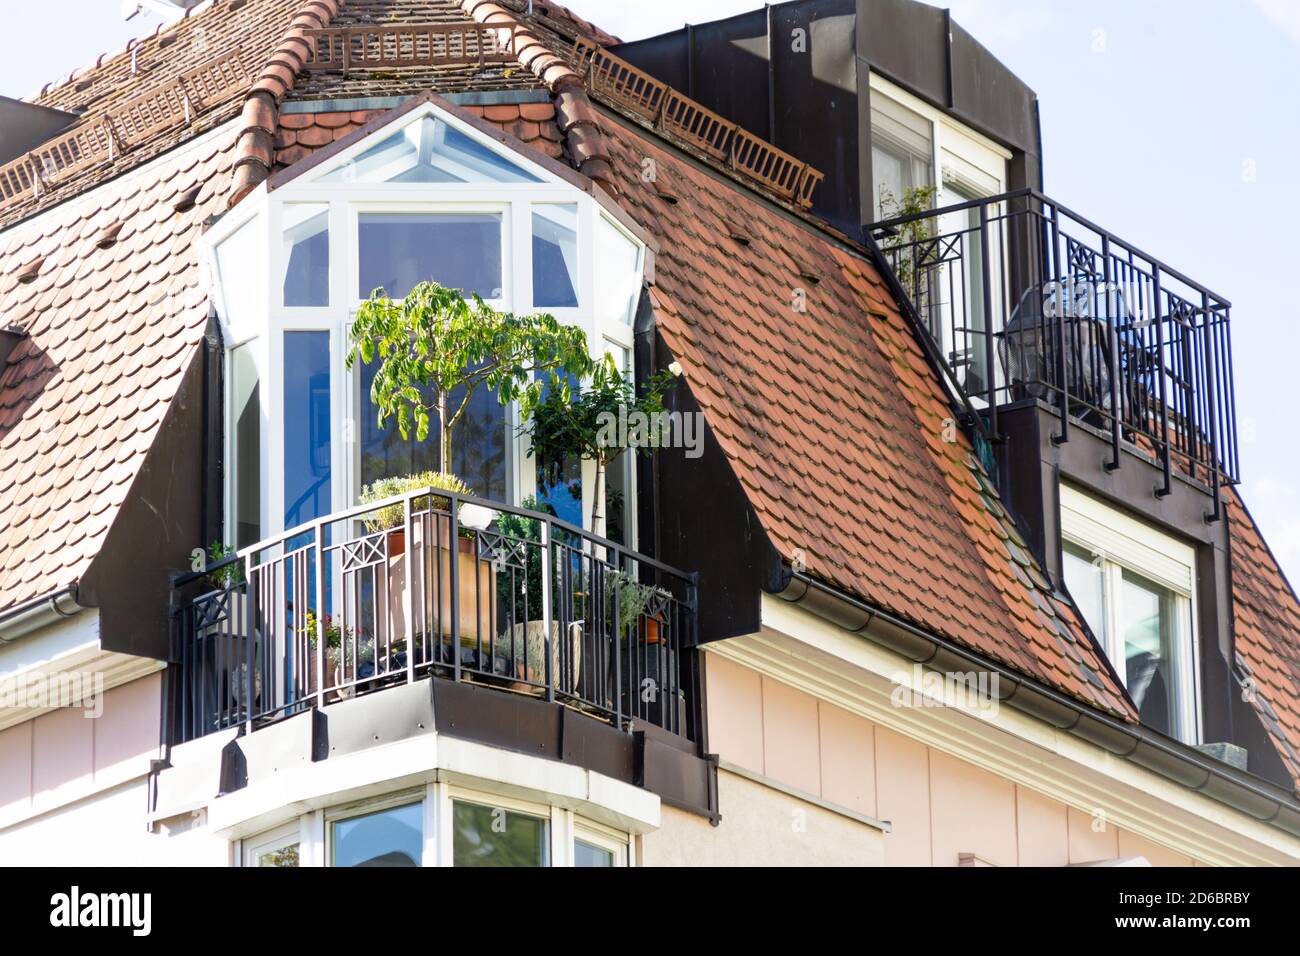 Romantic rooftop balconies on an old gründerzeit house Stock Photo